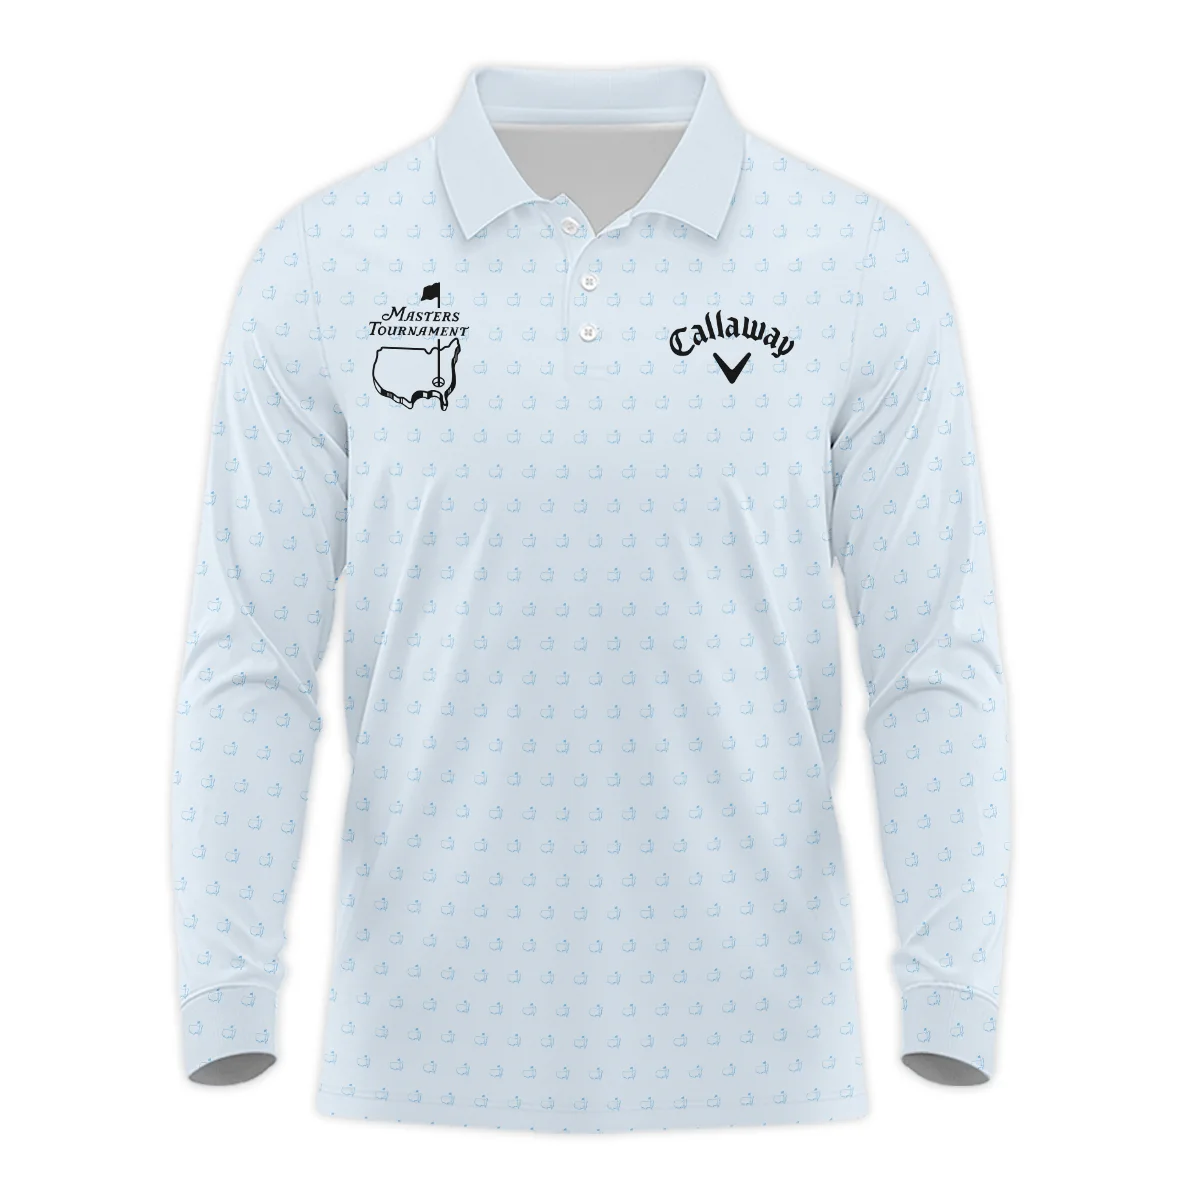 Pattern Masters Tournament Callaway Unisex T-Shirt White Light Blue Color Pattern Logo  T-Shirt